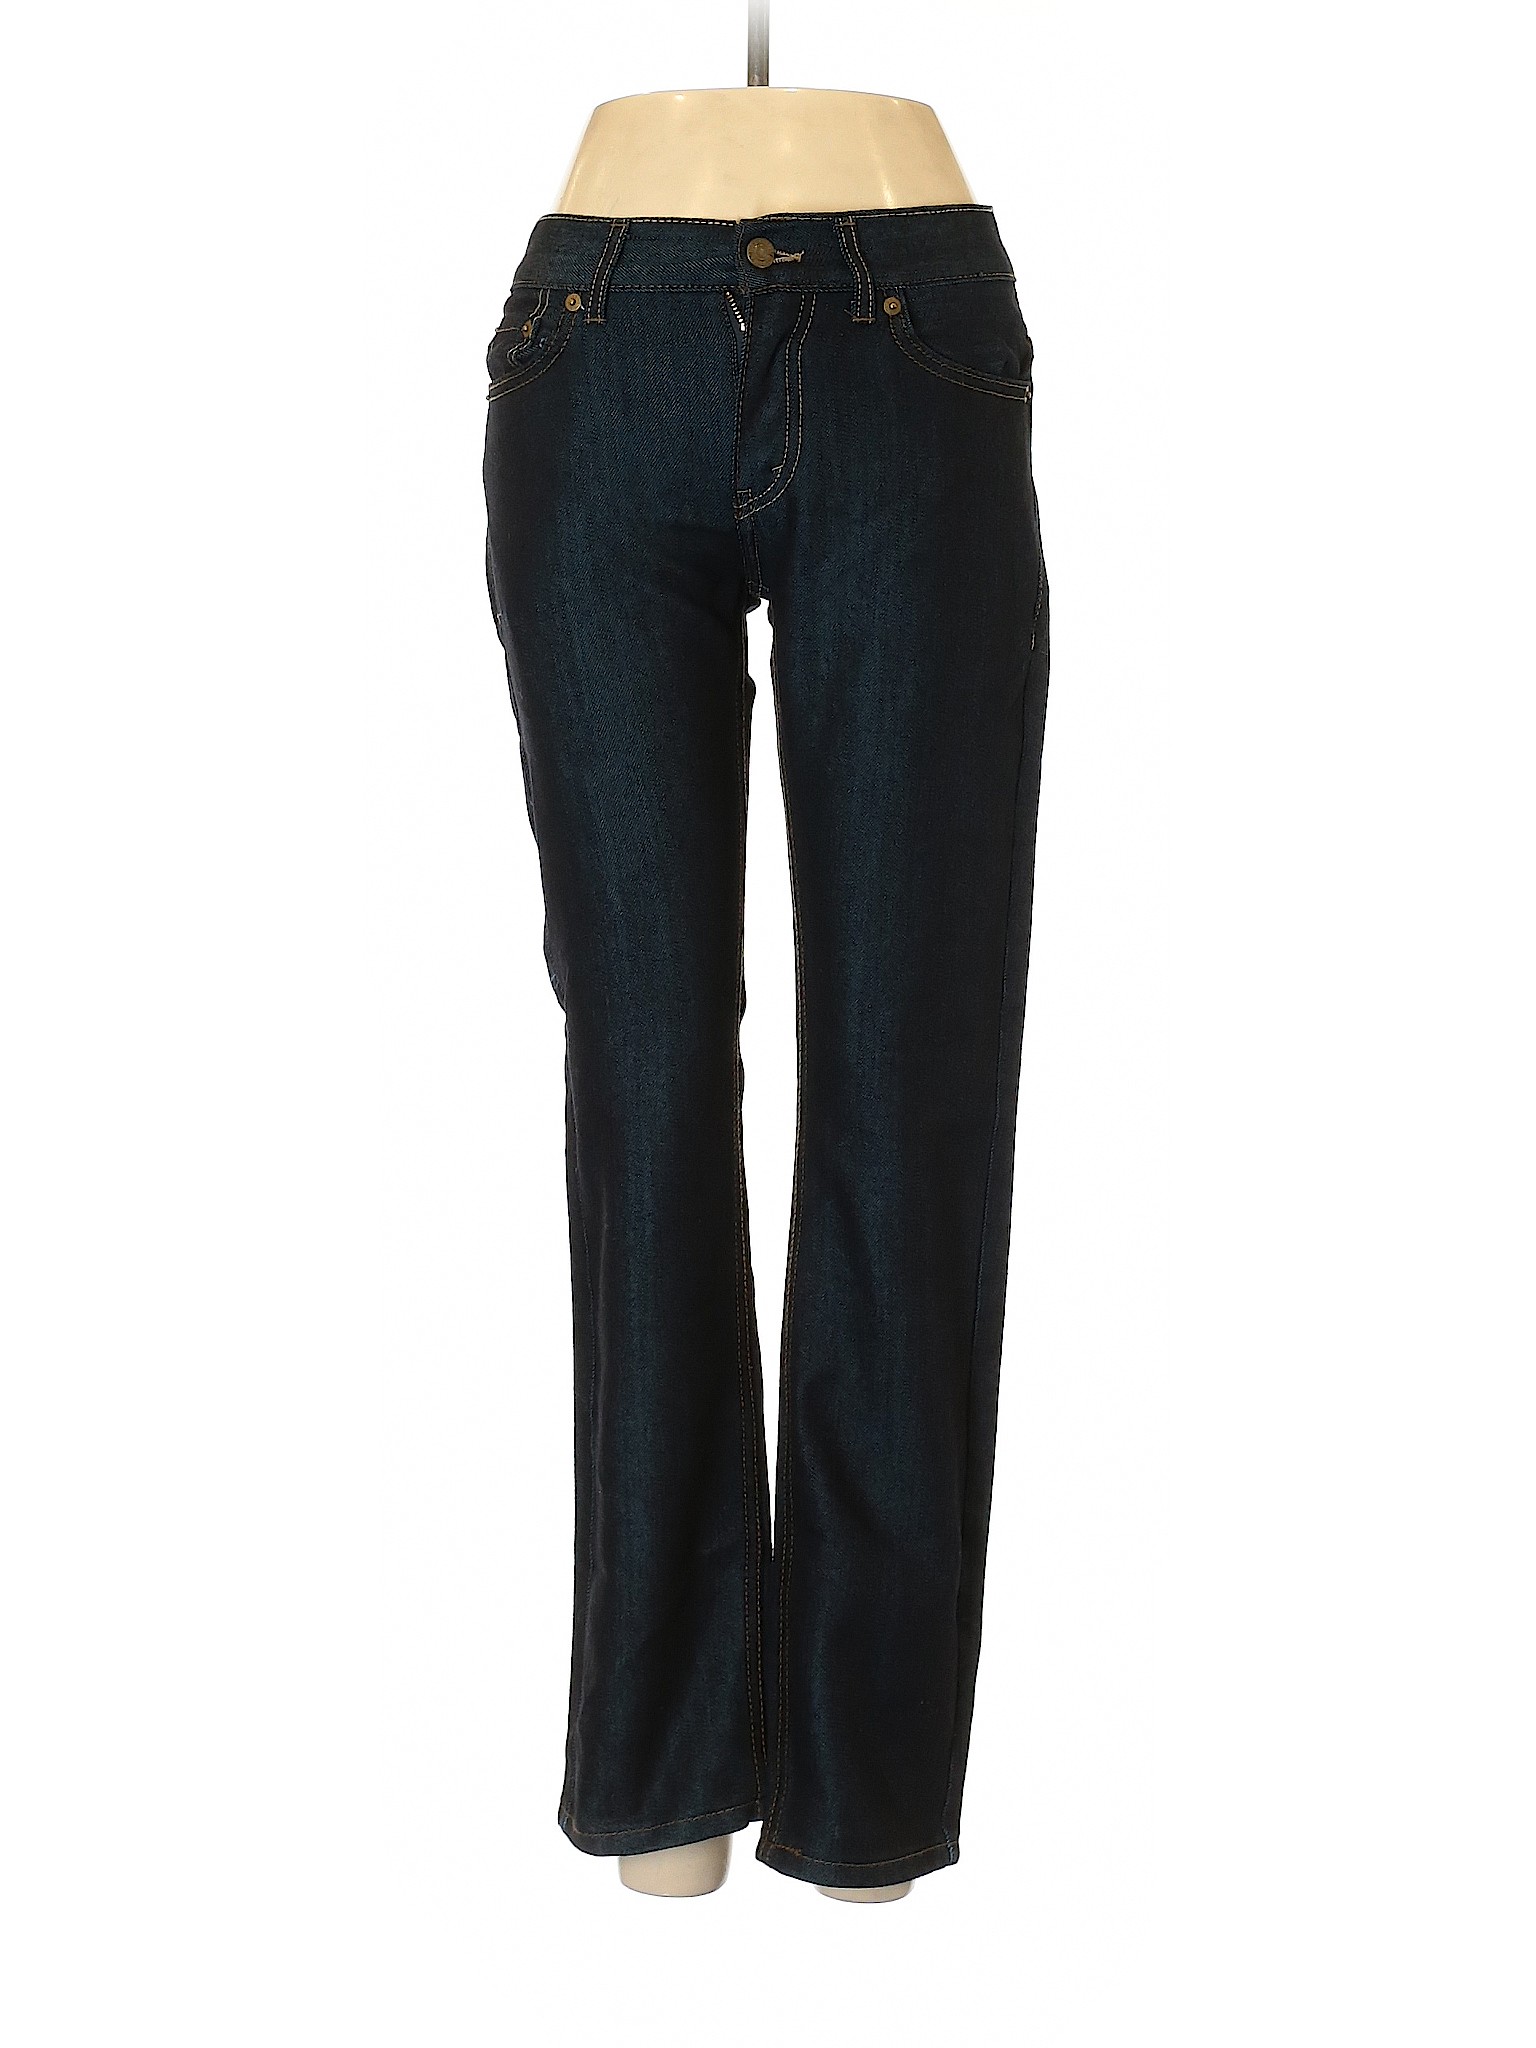 Levi's Solid Blue Jeans 27 Waist - 88% off | thredUP